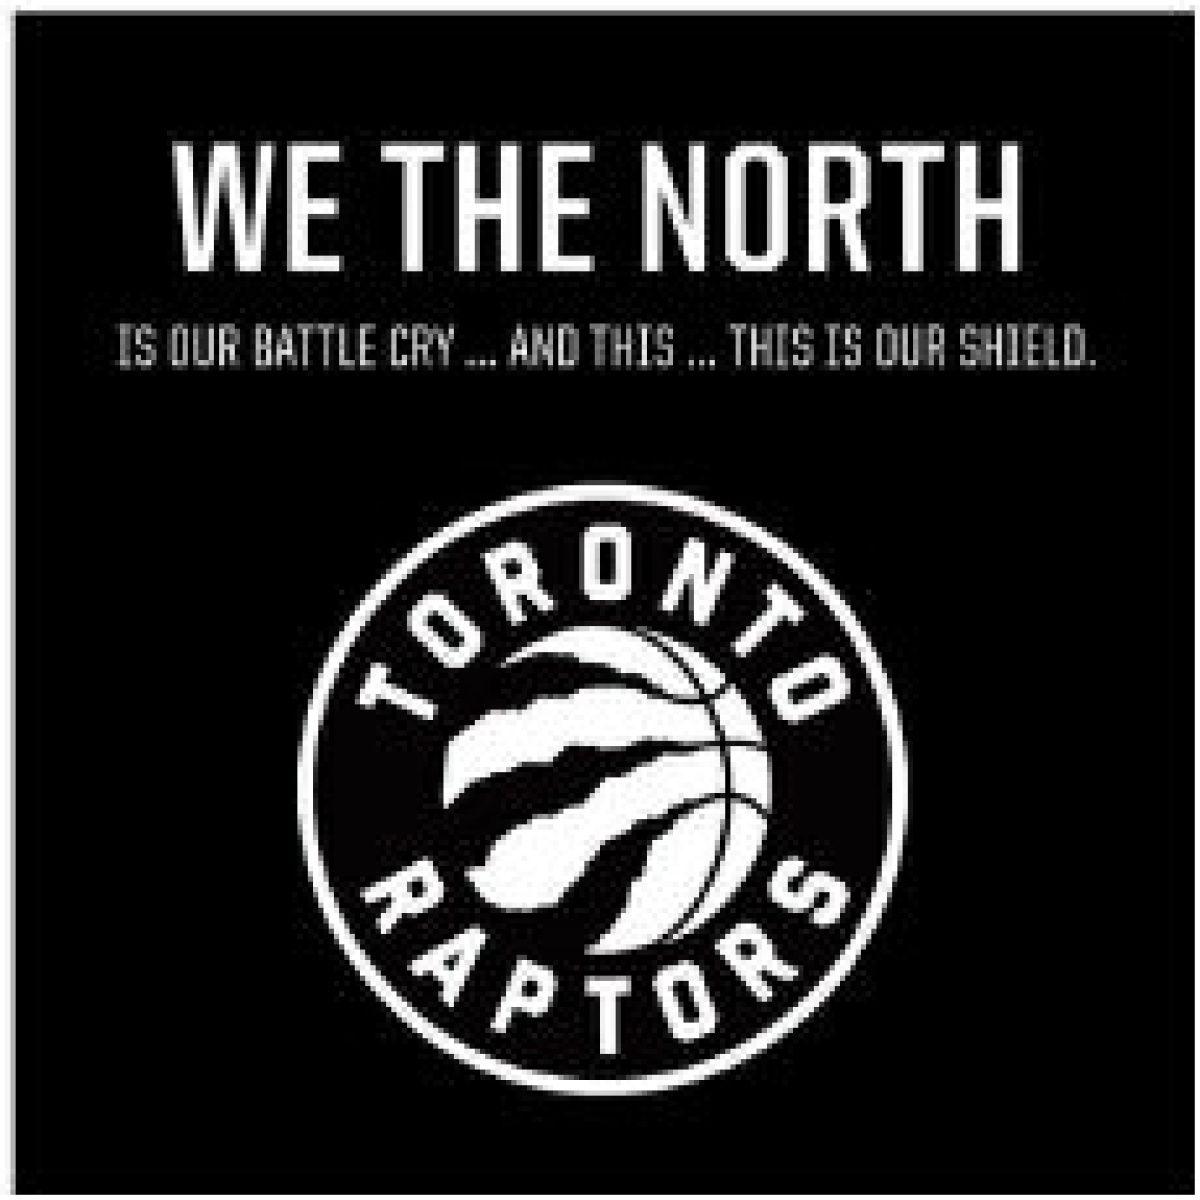 Toronto Raptors Logo - New Raptors logo gets a mixed verdict from fans | The Star